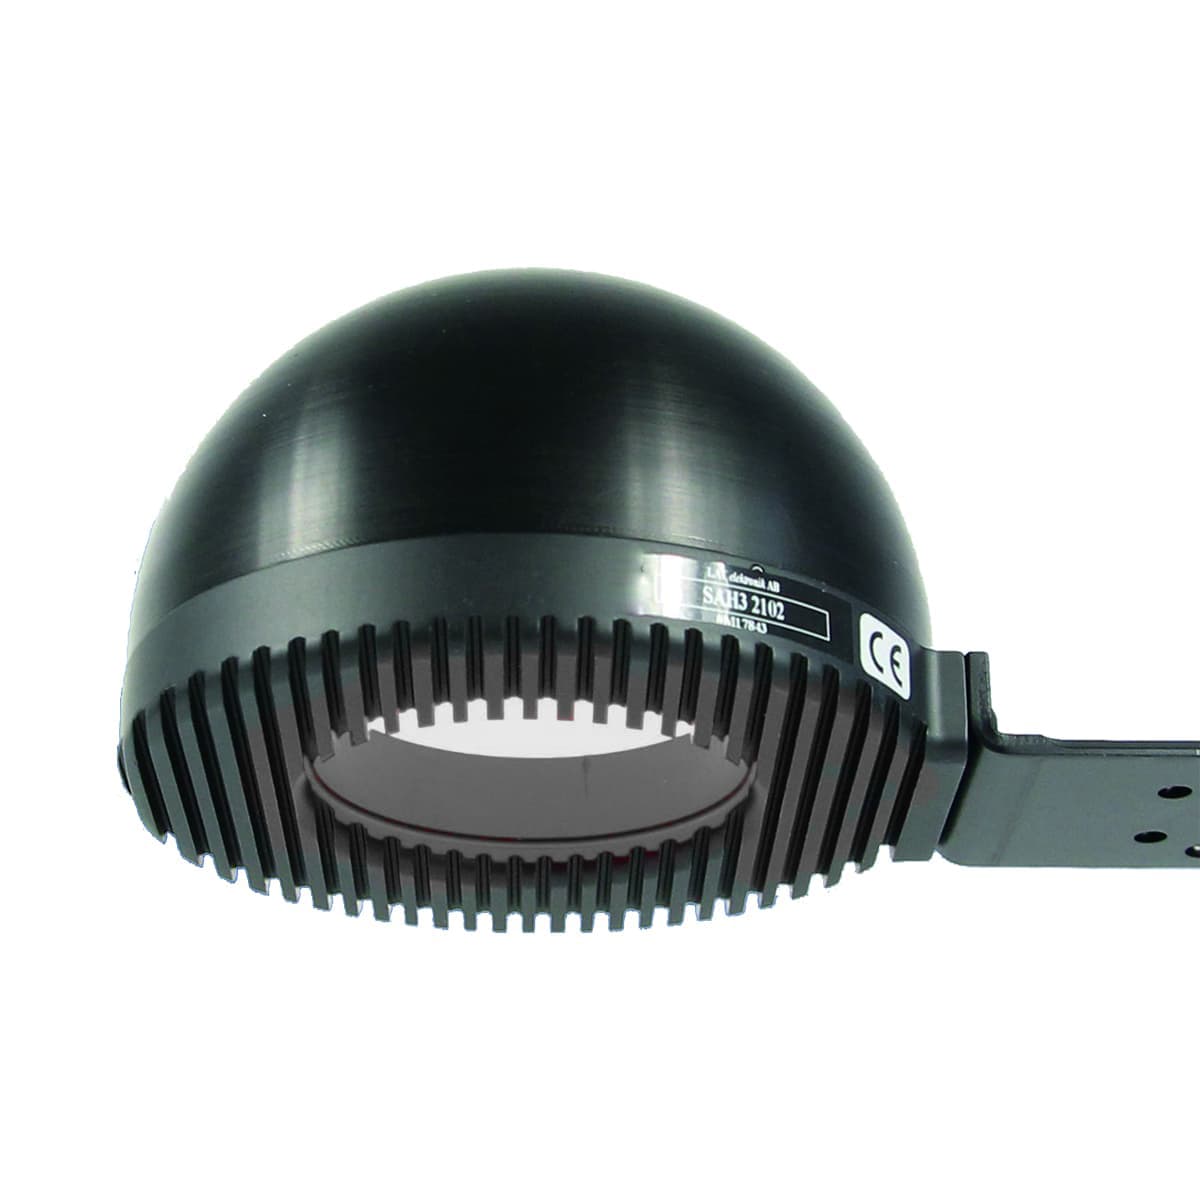 SAU3 2102 LATAB LED Dome light,102mm,UV